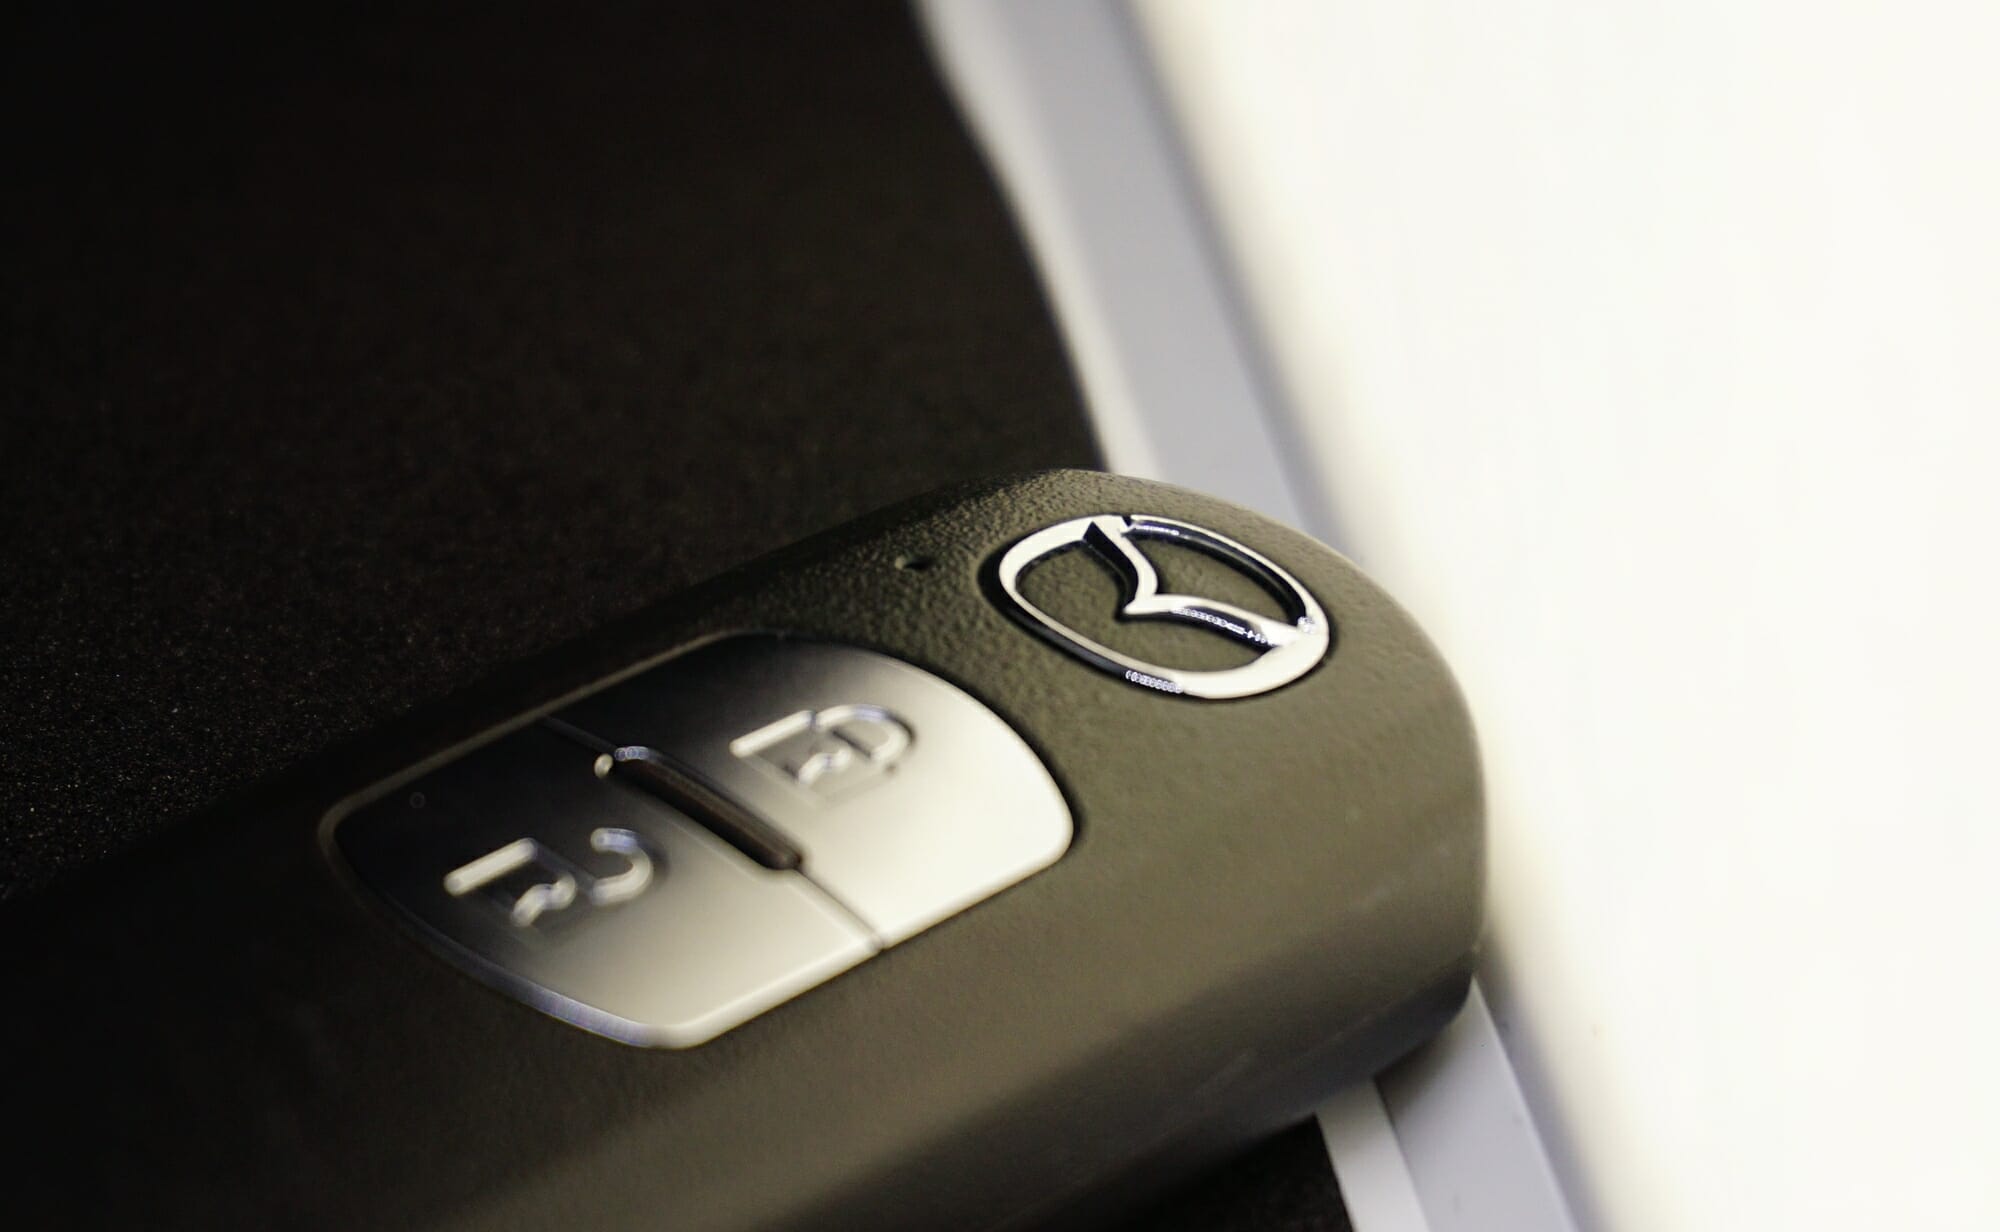 Mazda Key Closeup